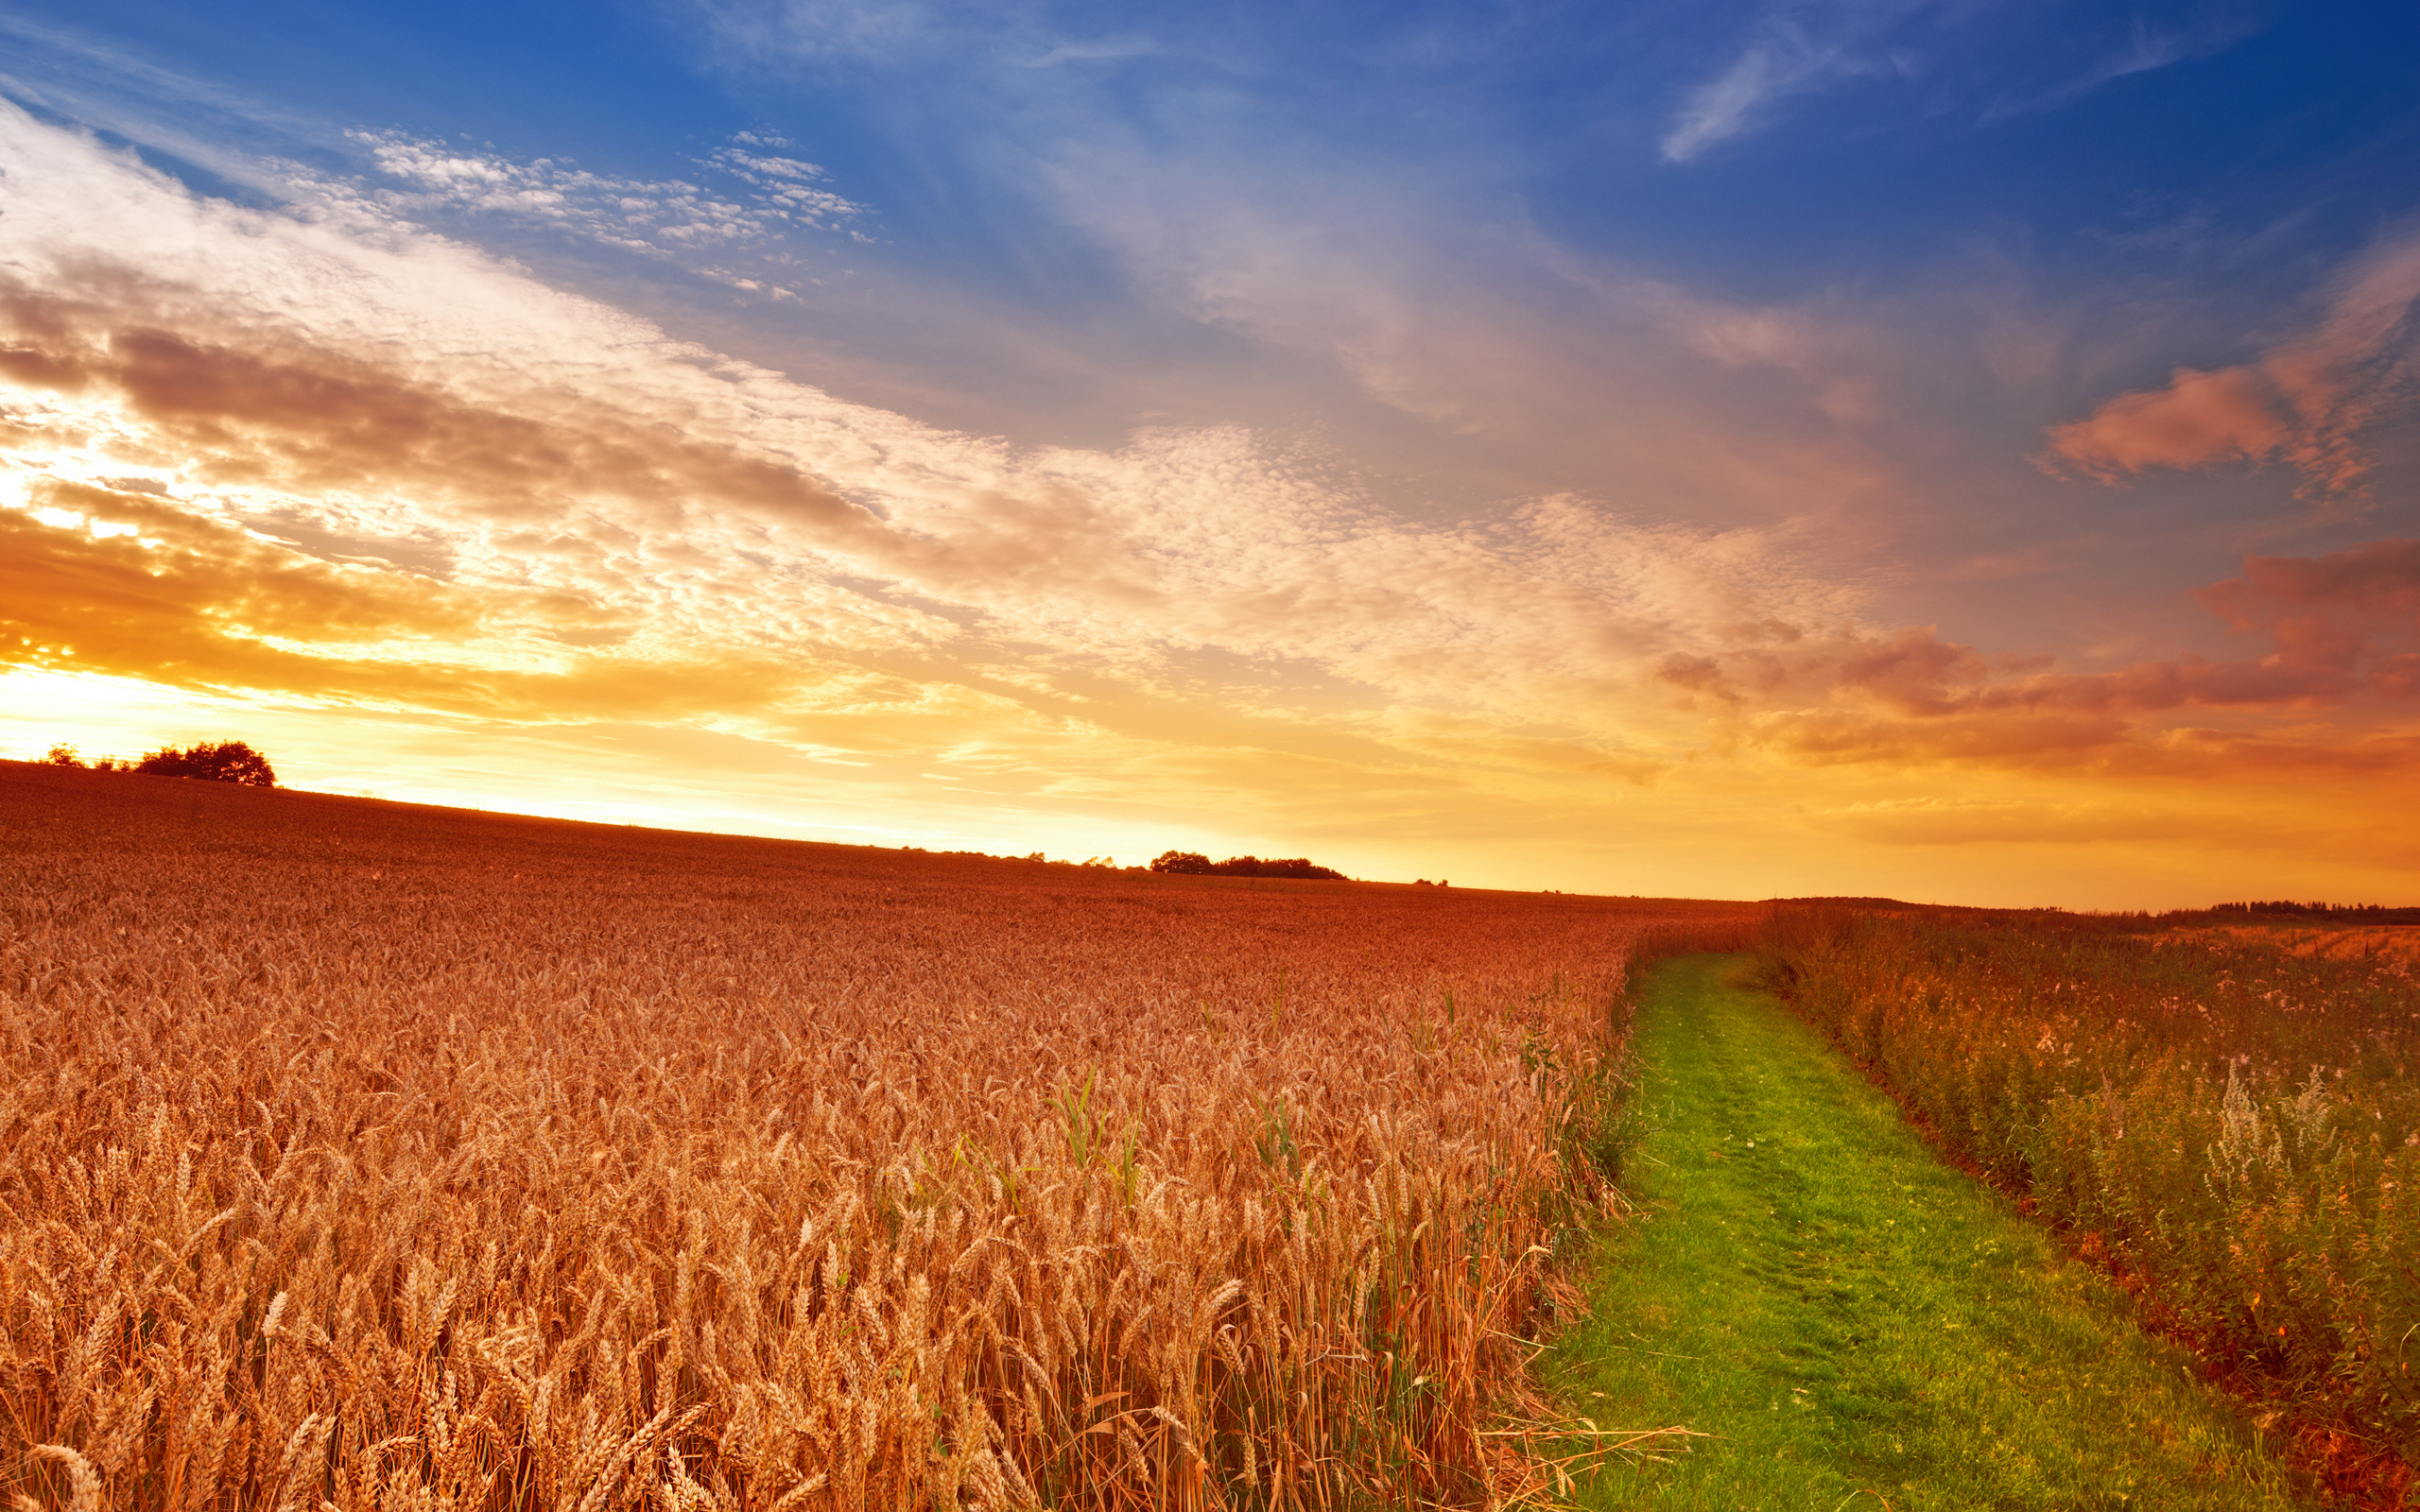 пшеница, колосья, поле, дорога, трава, облака, небо, солнце